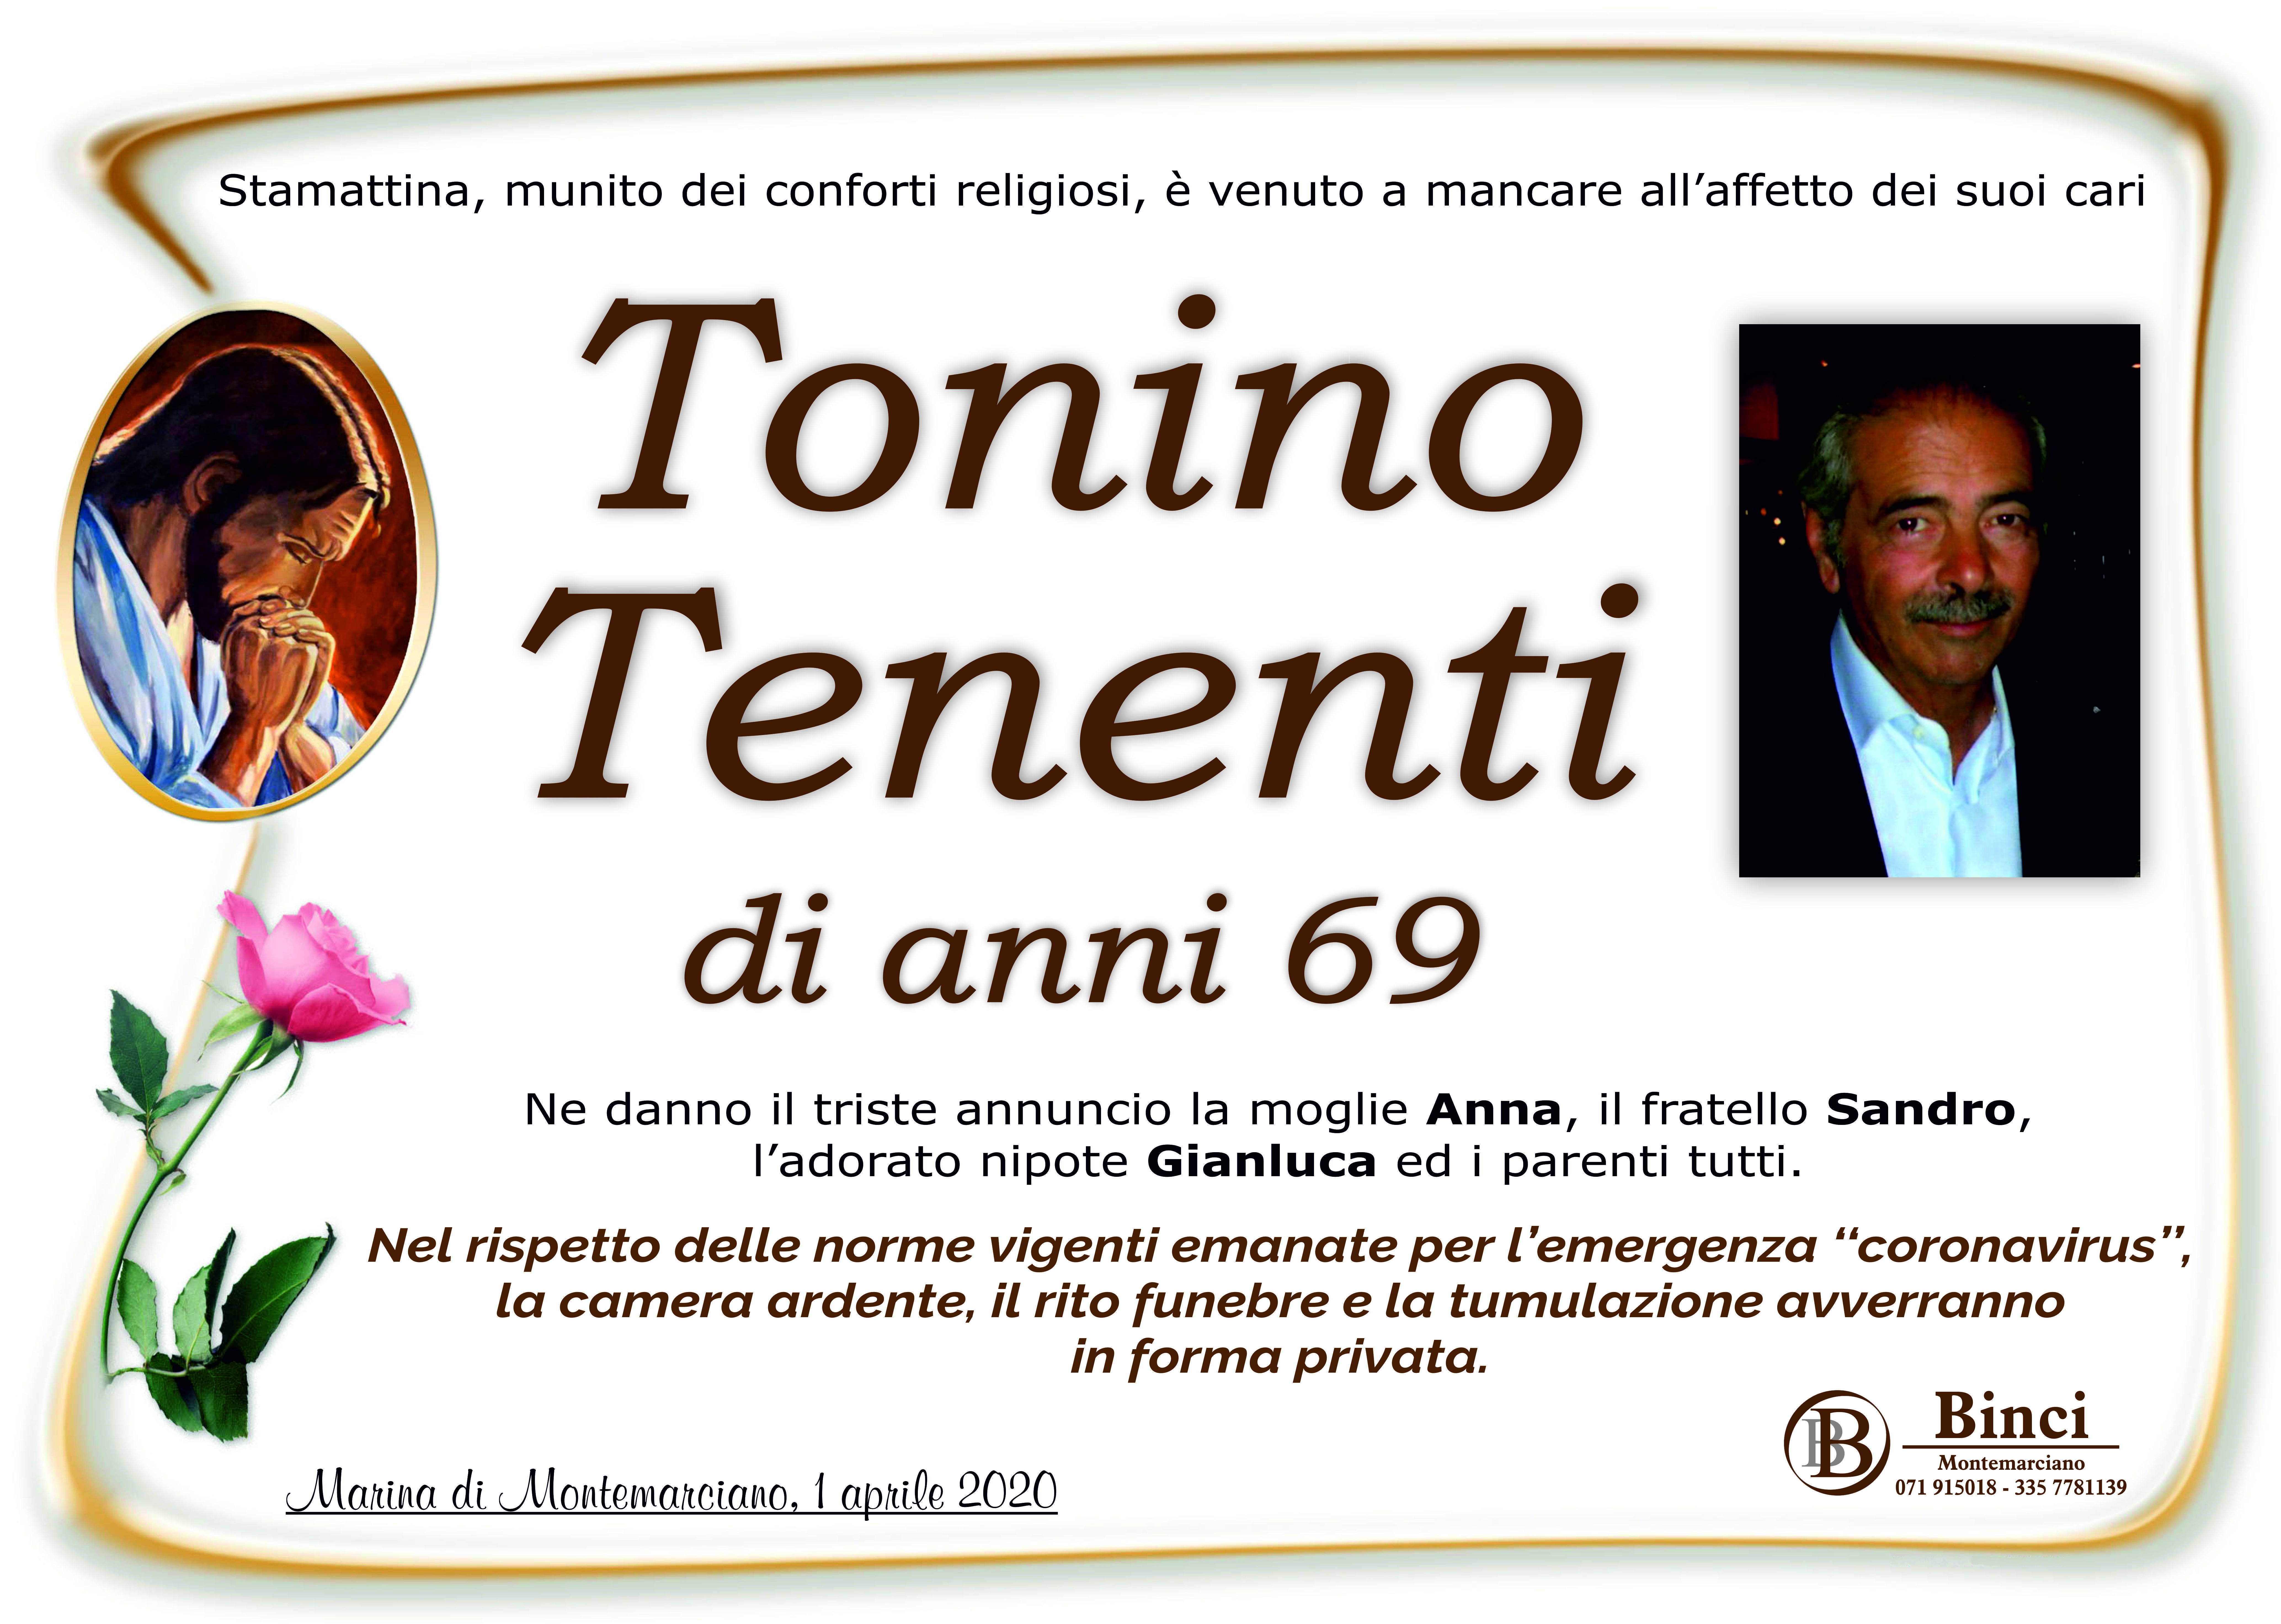 Tonino Tenenti